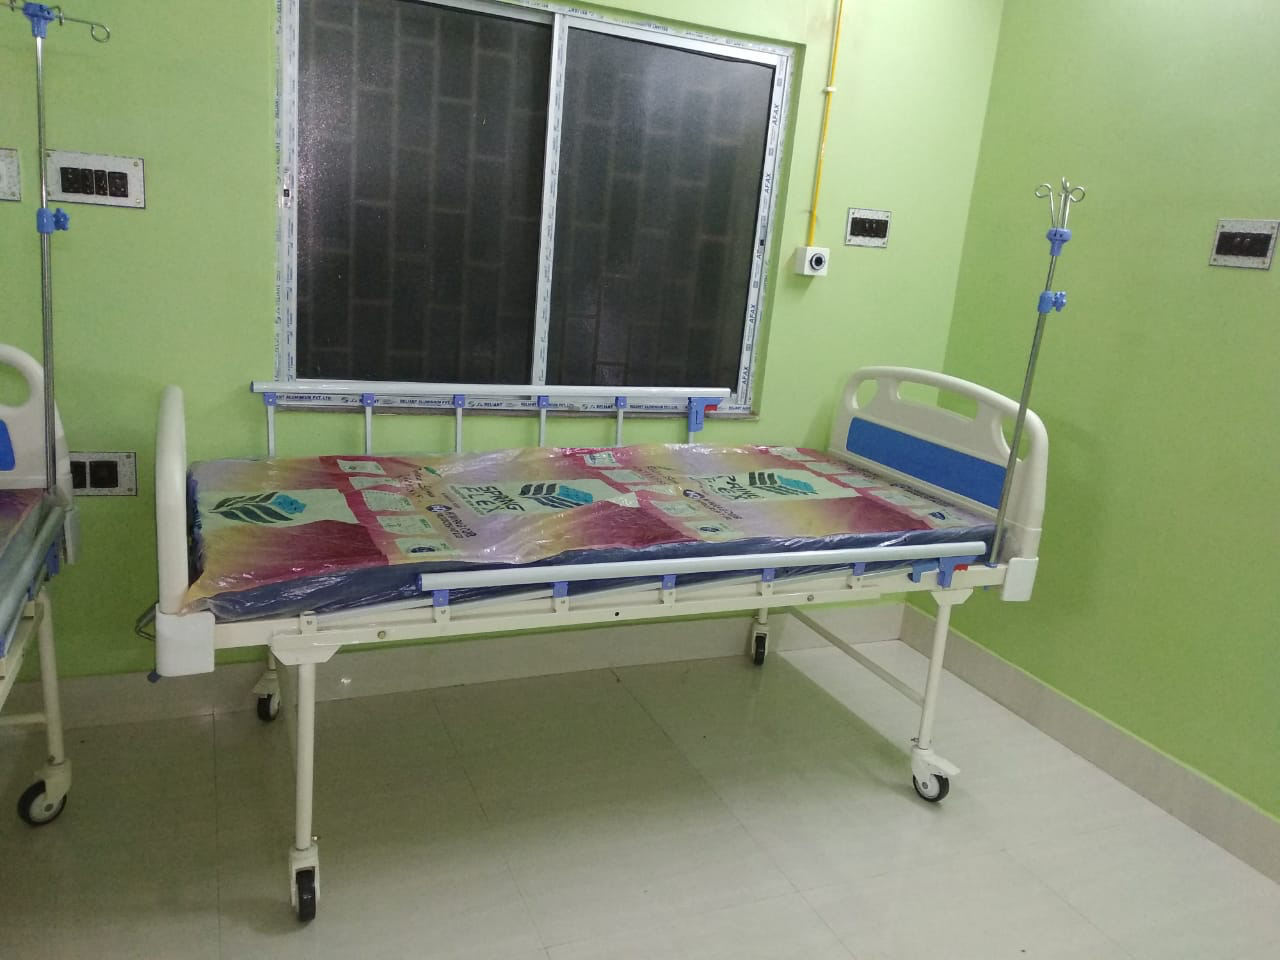 HOSPITAL BED